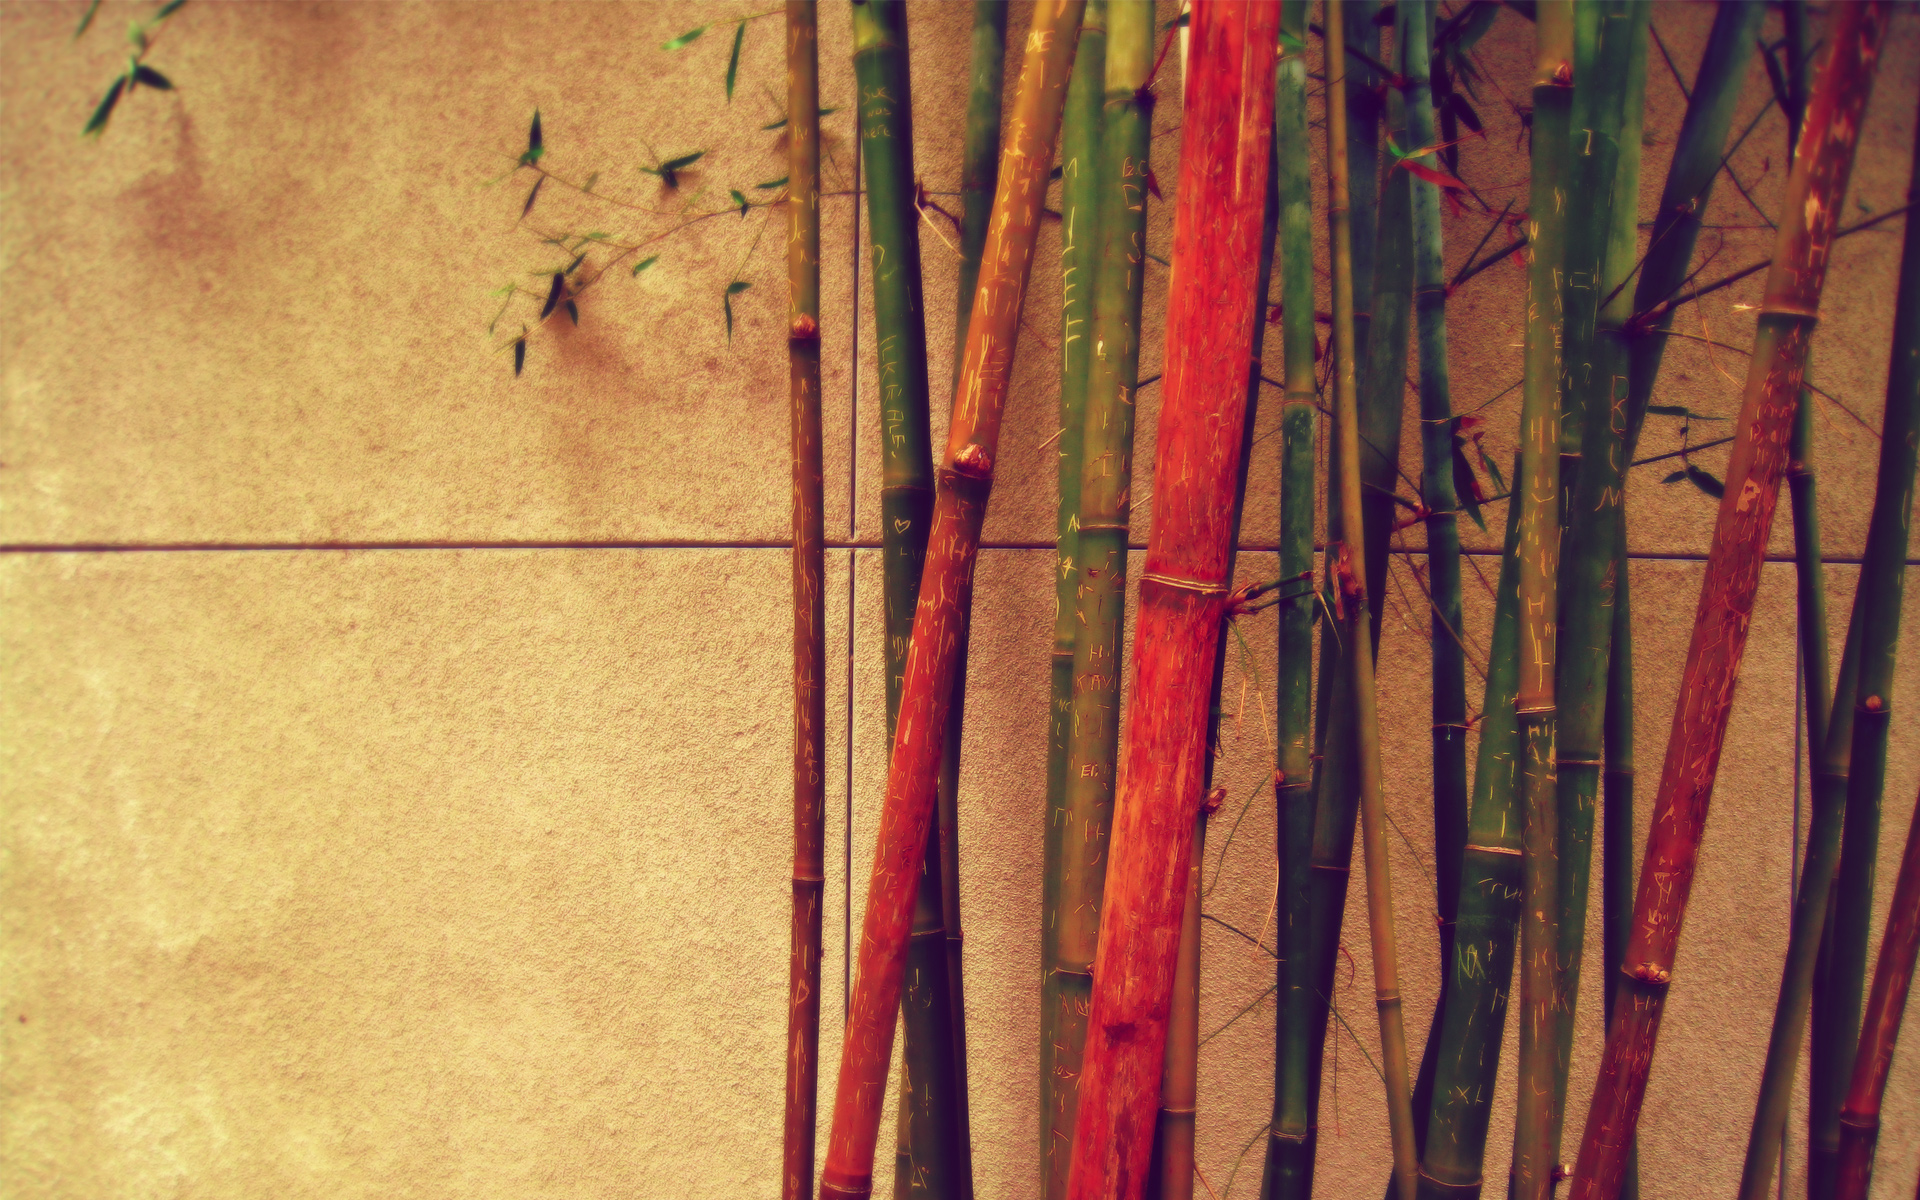 bamboo Wallpaper